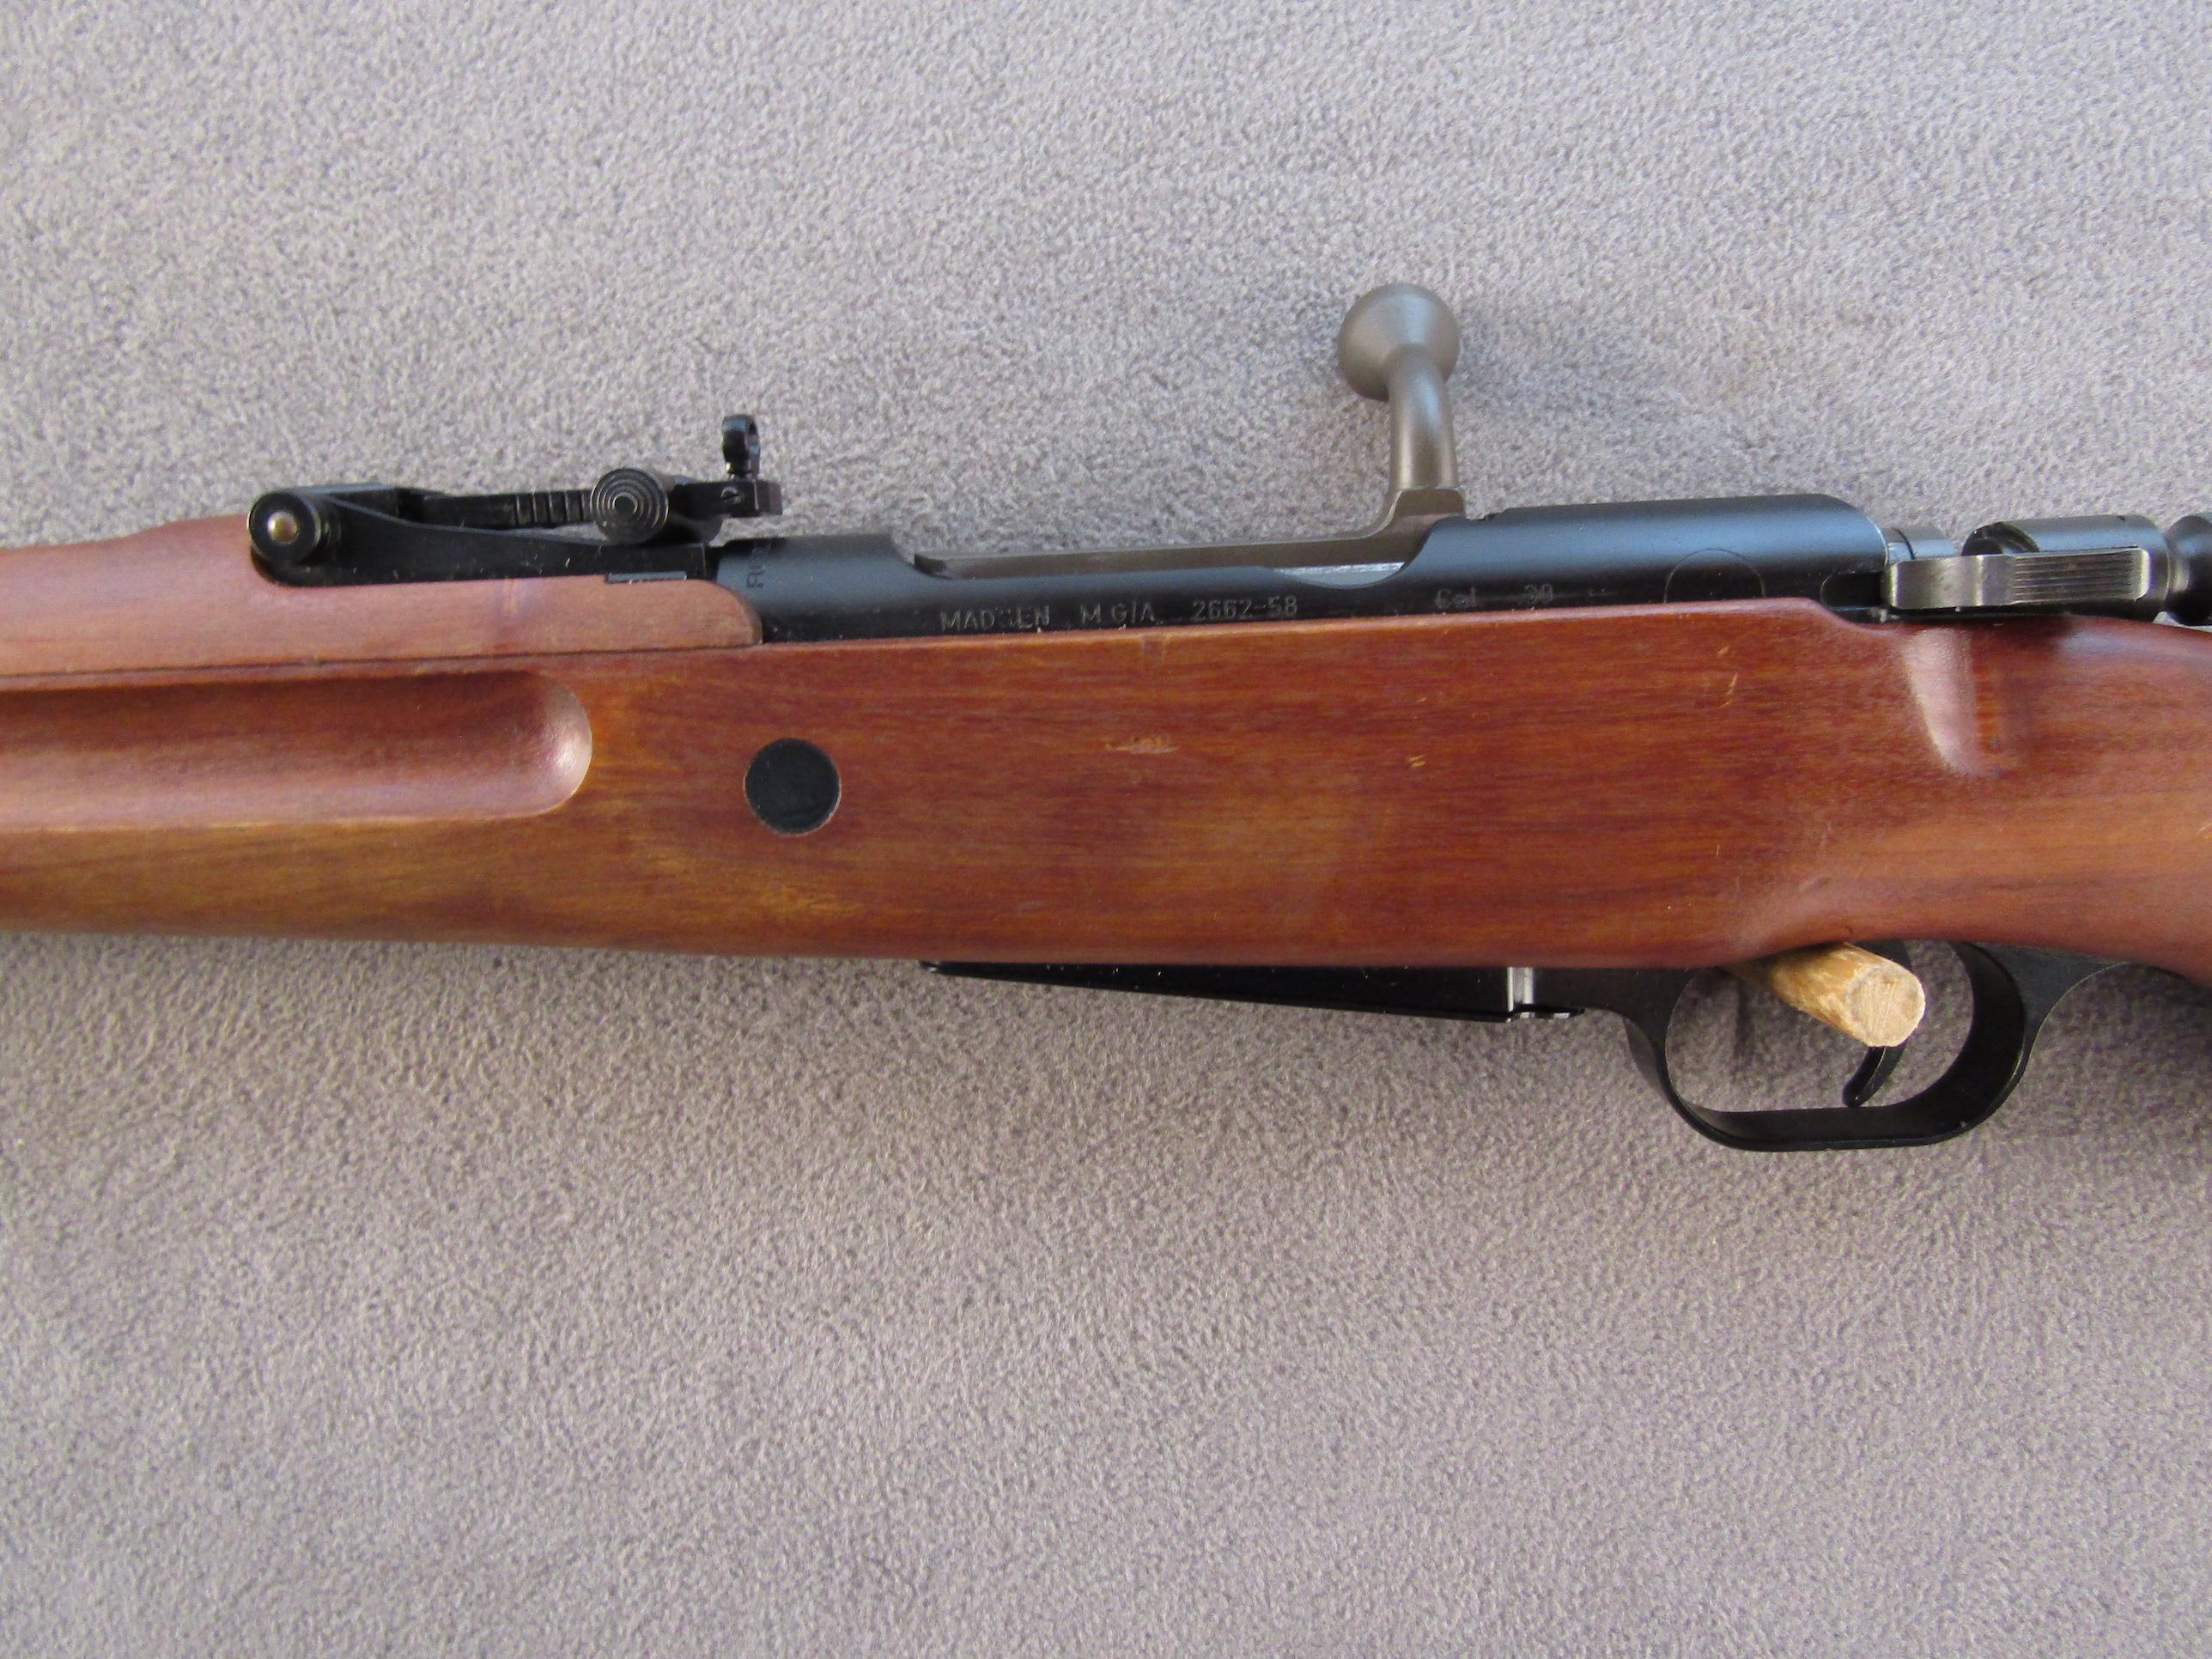 COLUMBIAN MADSEN MAUSER Model MG1A, Bolt-Action Rifle, 30-06, S#2662-58